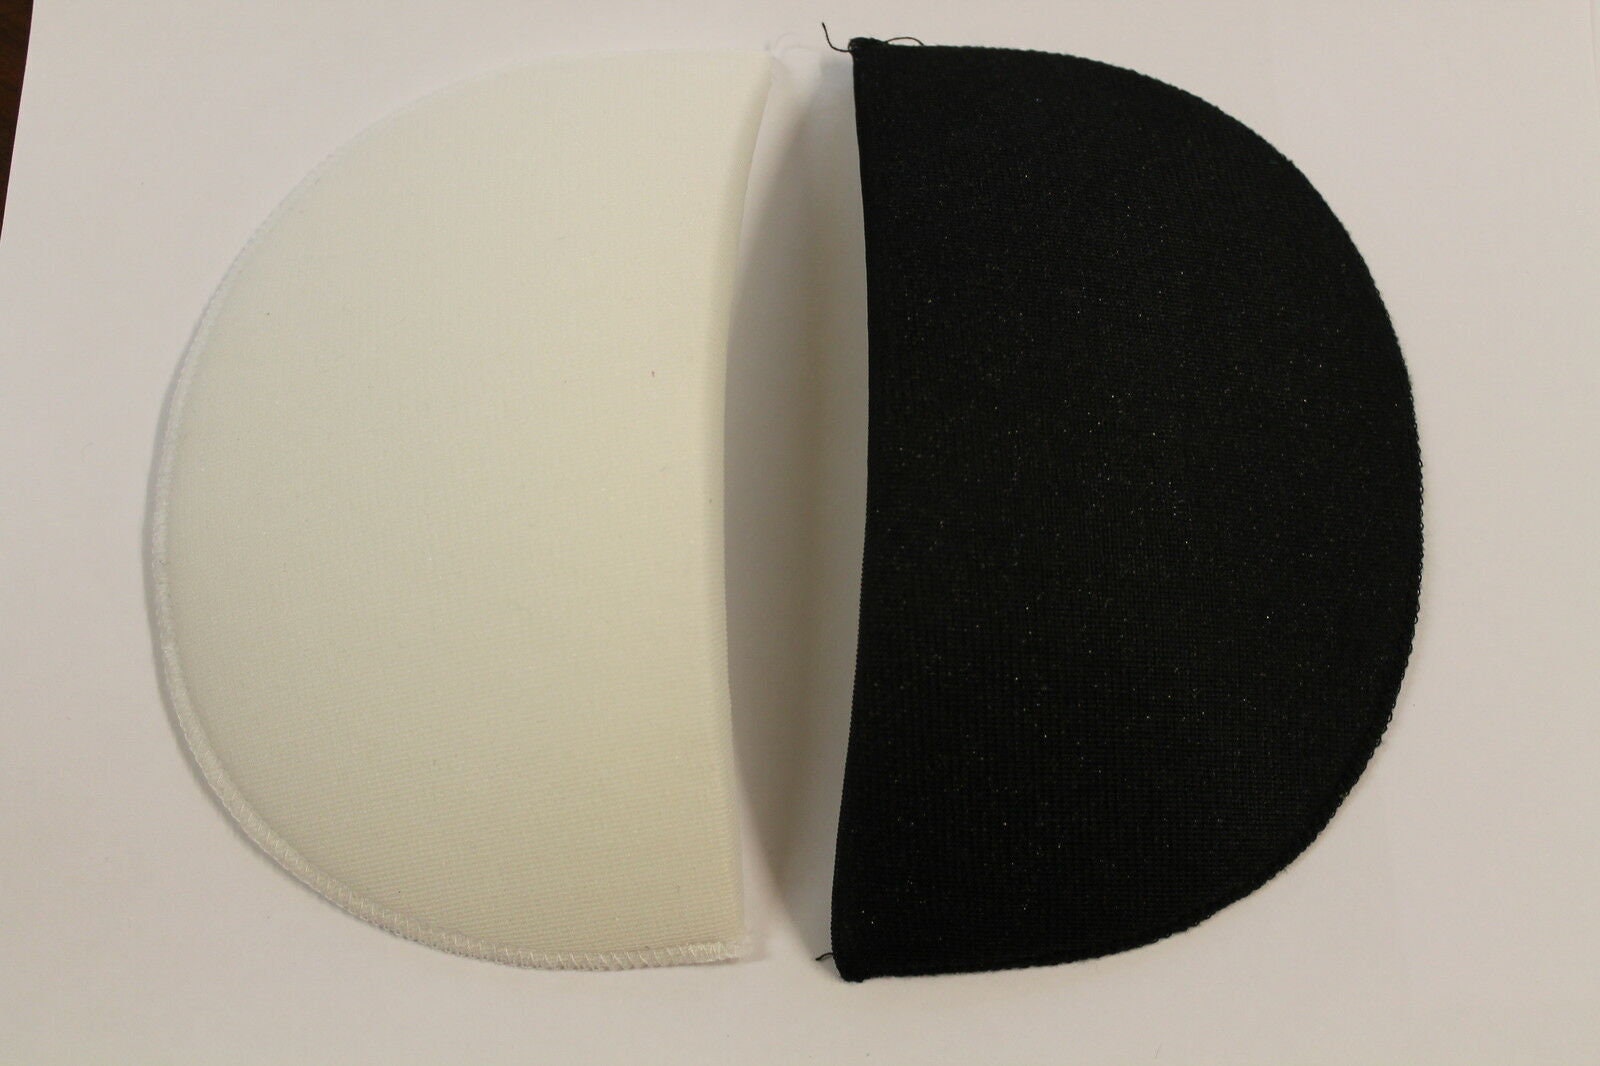 2 Pairs Shoulder Pads Sewing Foam Pads Sponge Shoulder Pad Set-in